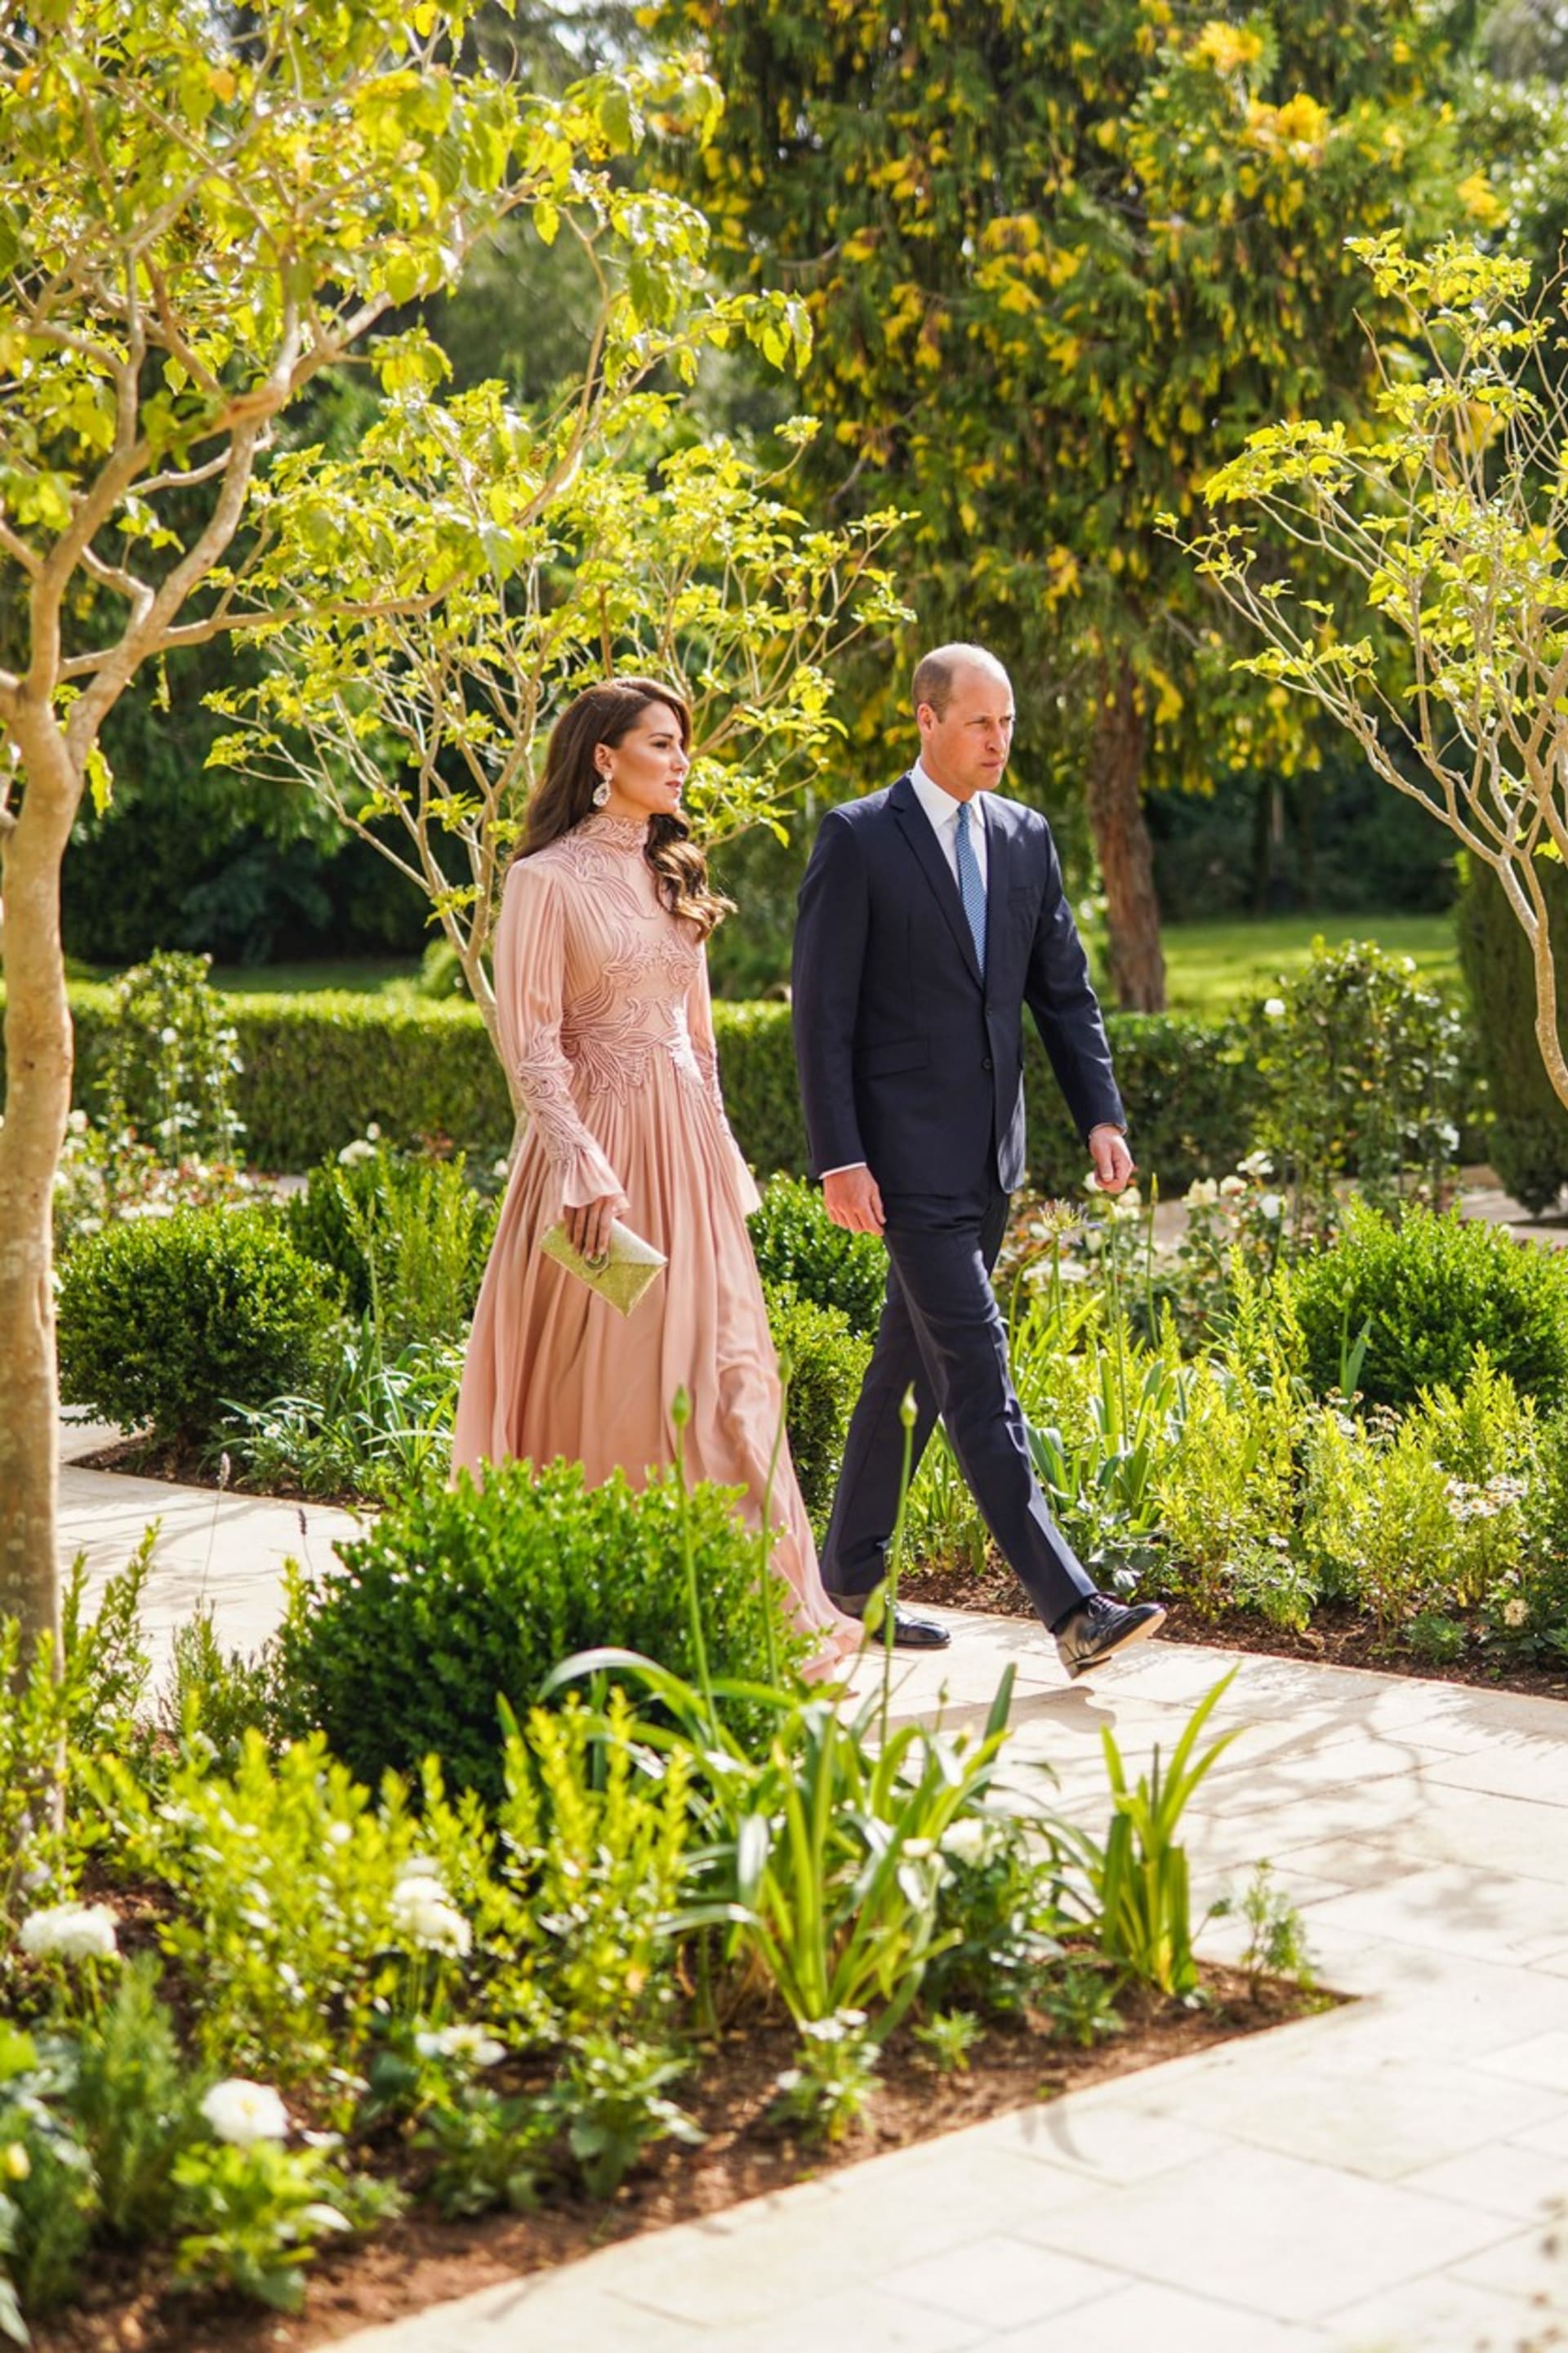 Na svatbu dorazil i britský korunní princ William a manželkou Kate.